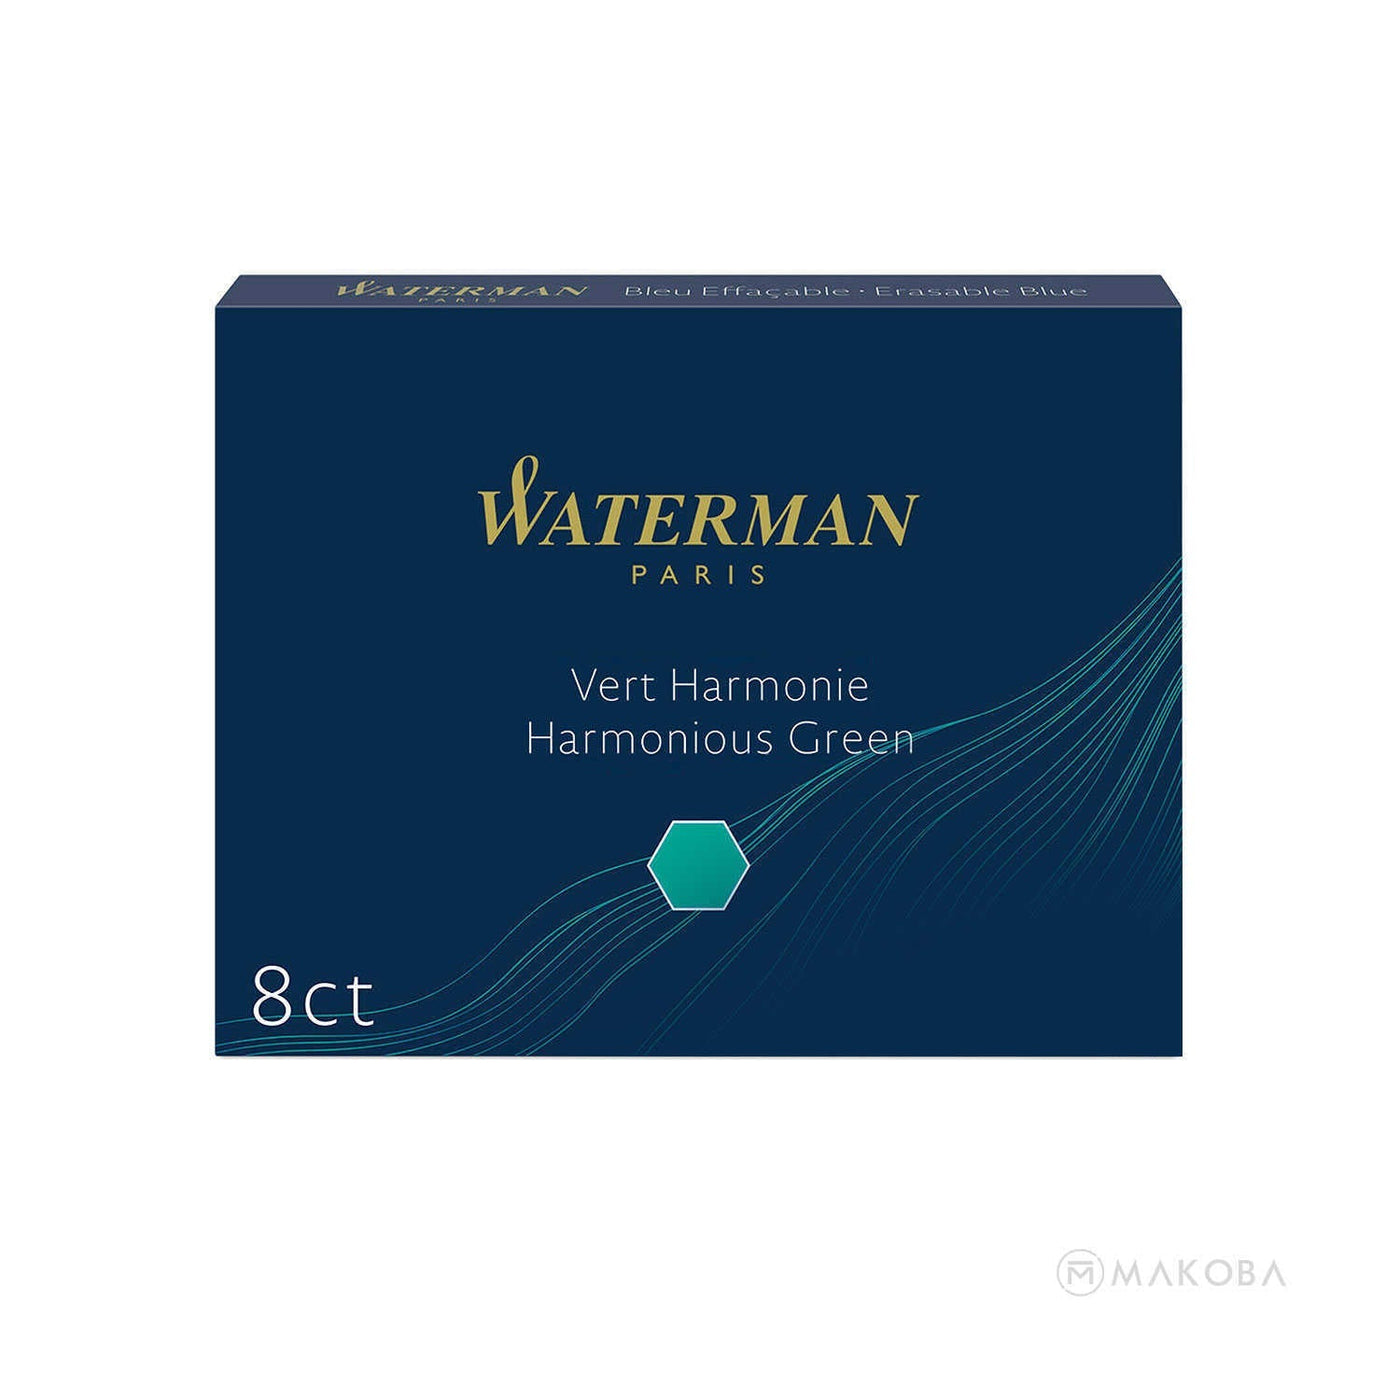 Waterman Long Ink Cartridge Pack of 8 - Harmonious Green